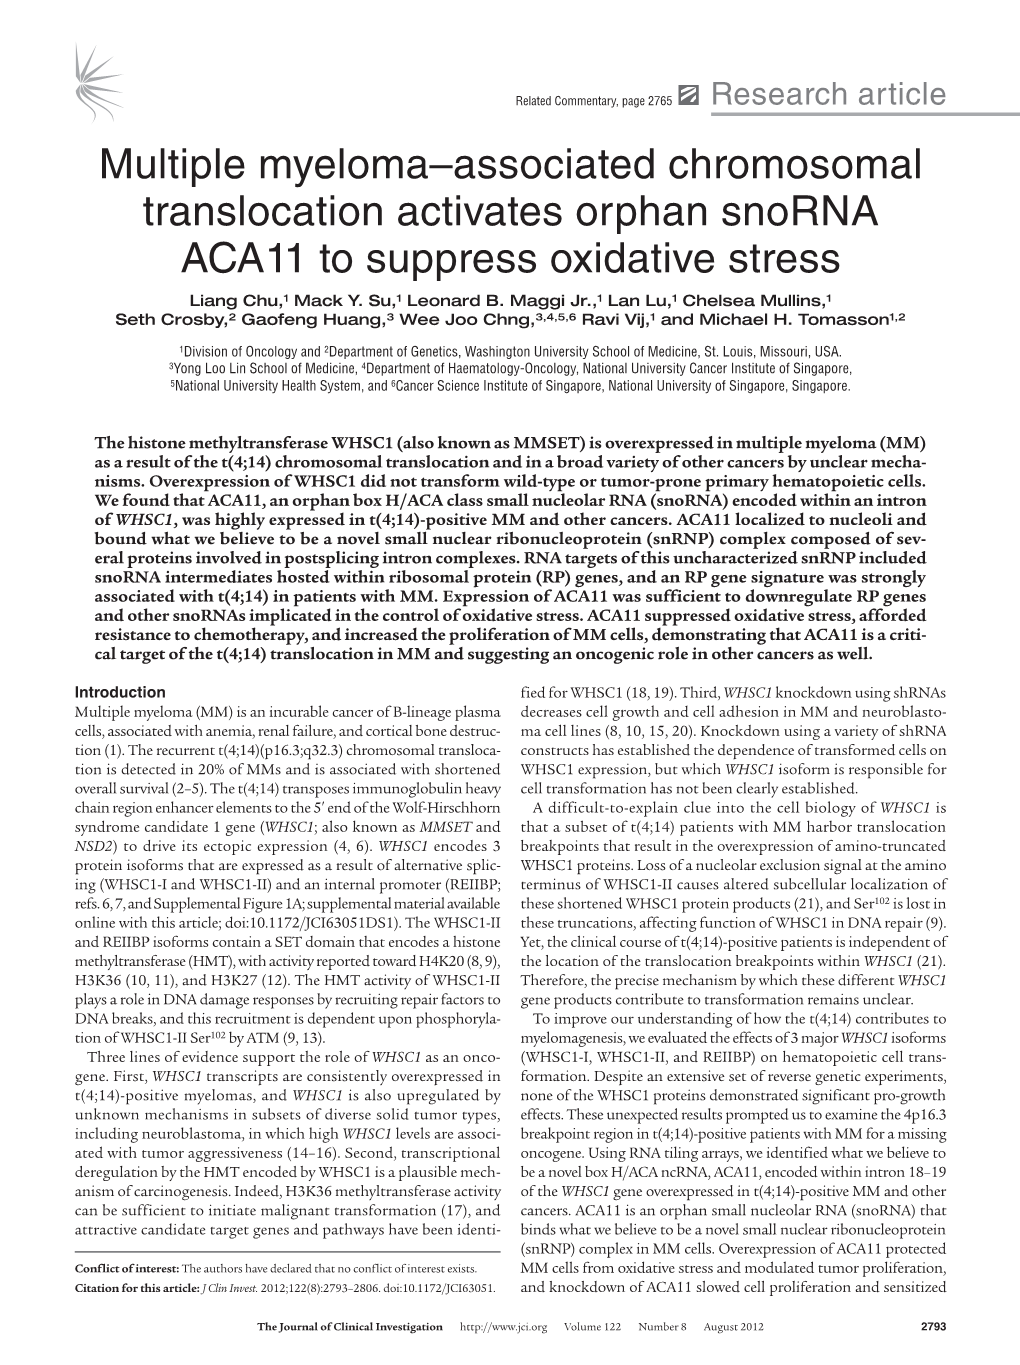 Multiple Myeloma–Associated Chromosomal Translocation Activates Orphan Snorna ACA11 to Suppress Oxidative Stress Liang Chu,1 Mack Y